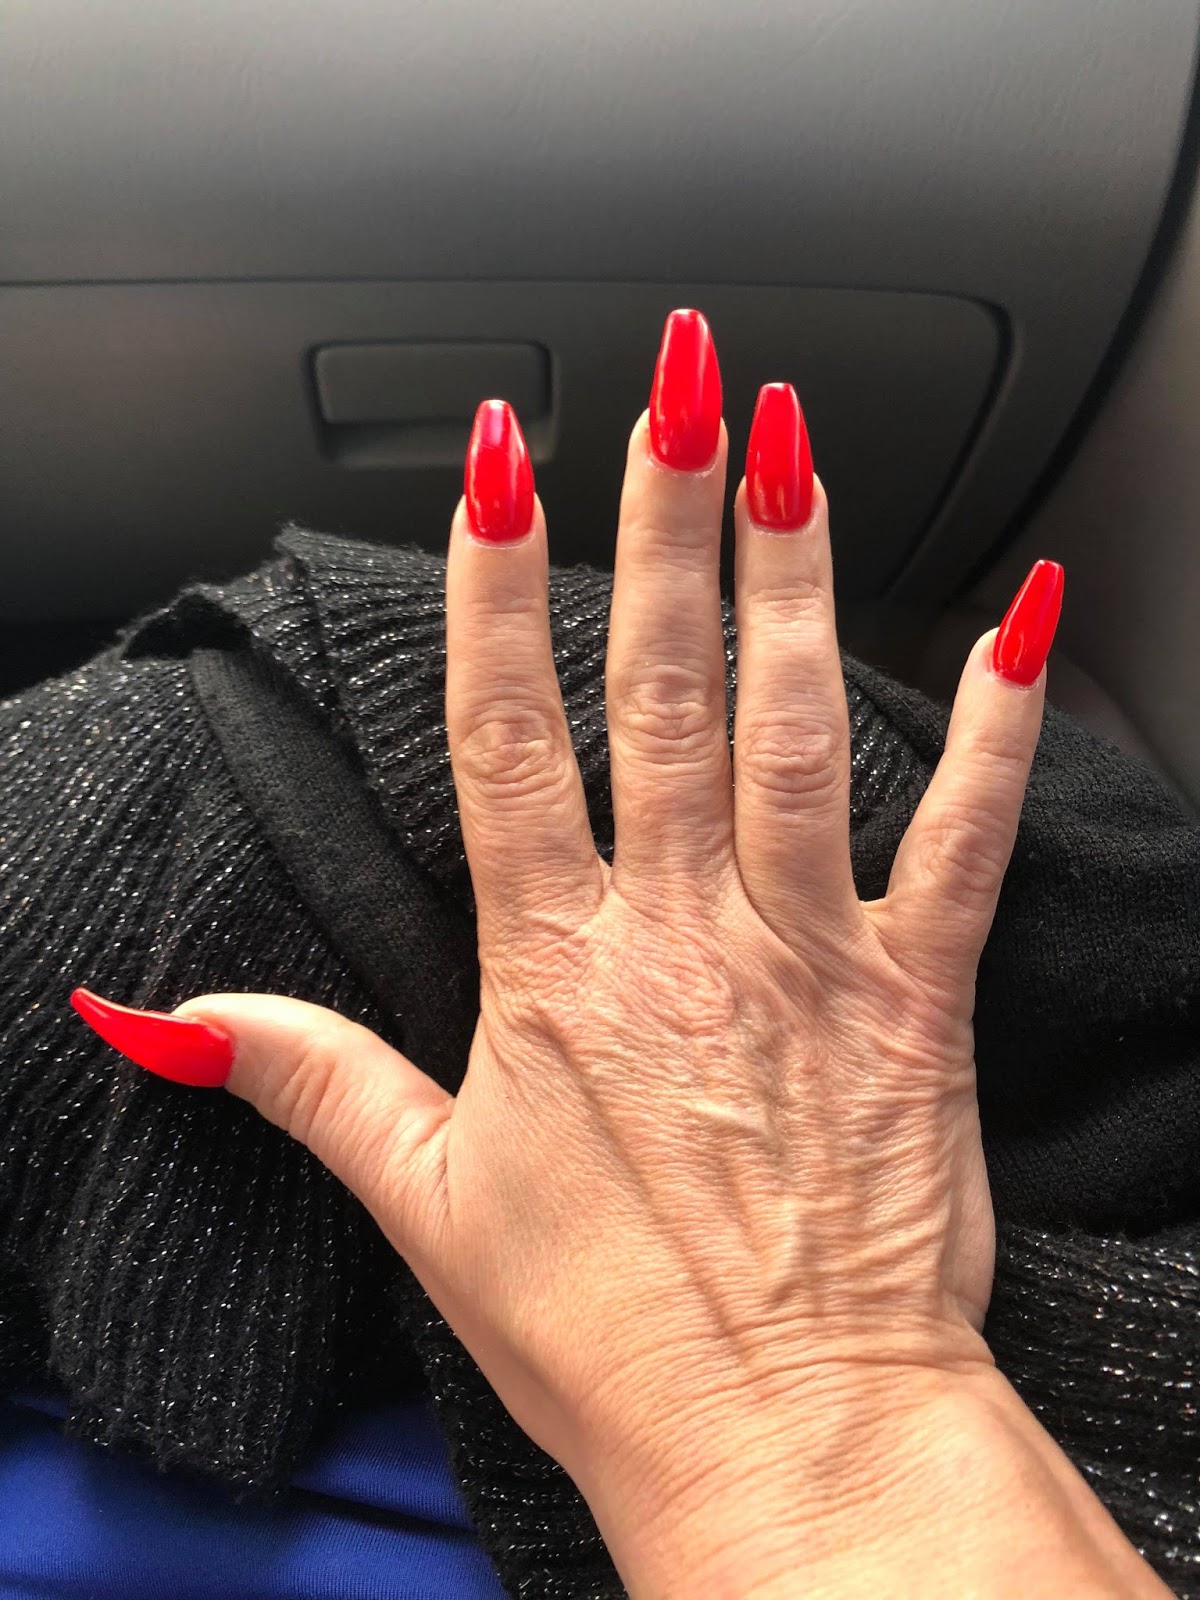 Long fingernails